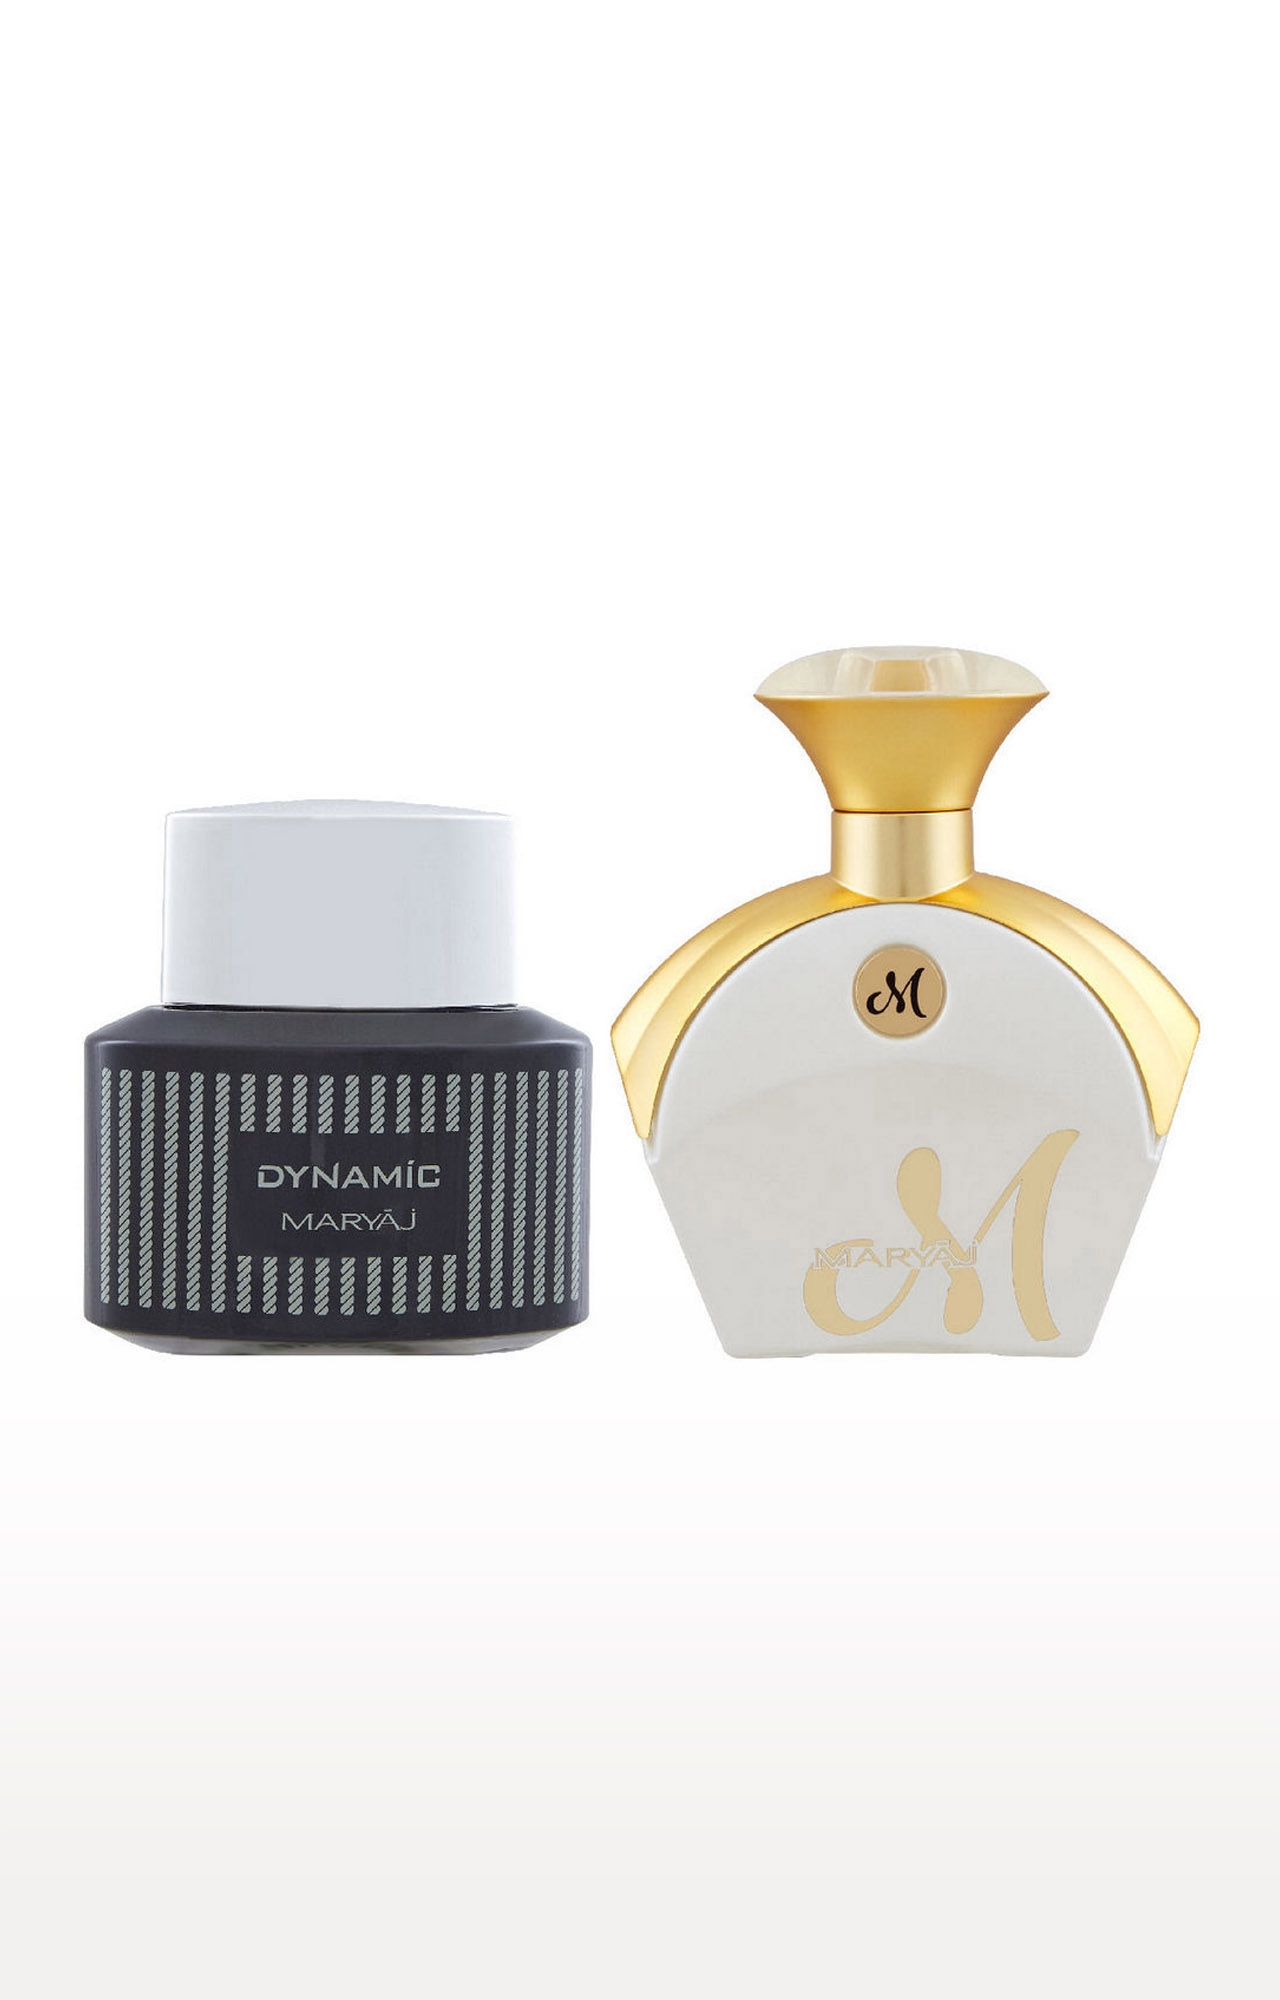 Maryaj | Maryaj Dynamic Eau De Parfum Perfume 100ml for Men and Maryaj M White for Her Eau De Parfum Fruity Perfume 90ml for Women 0